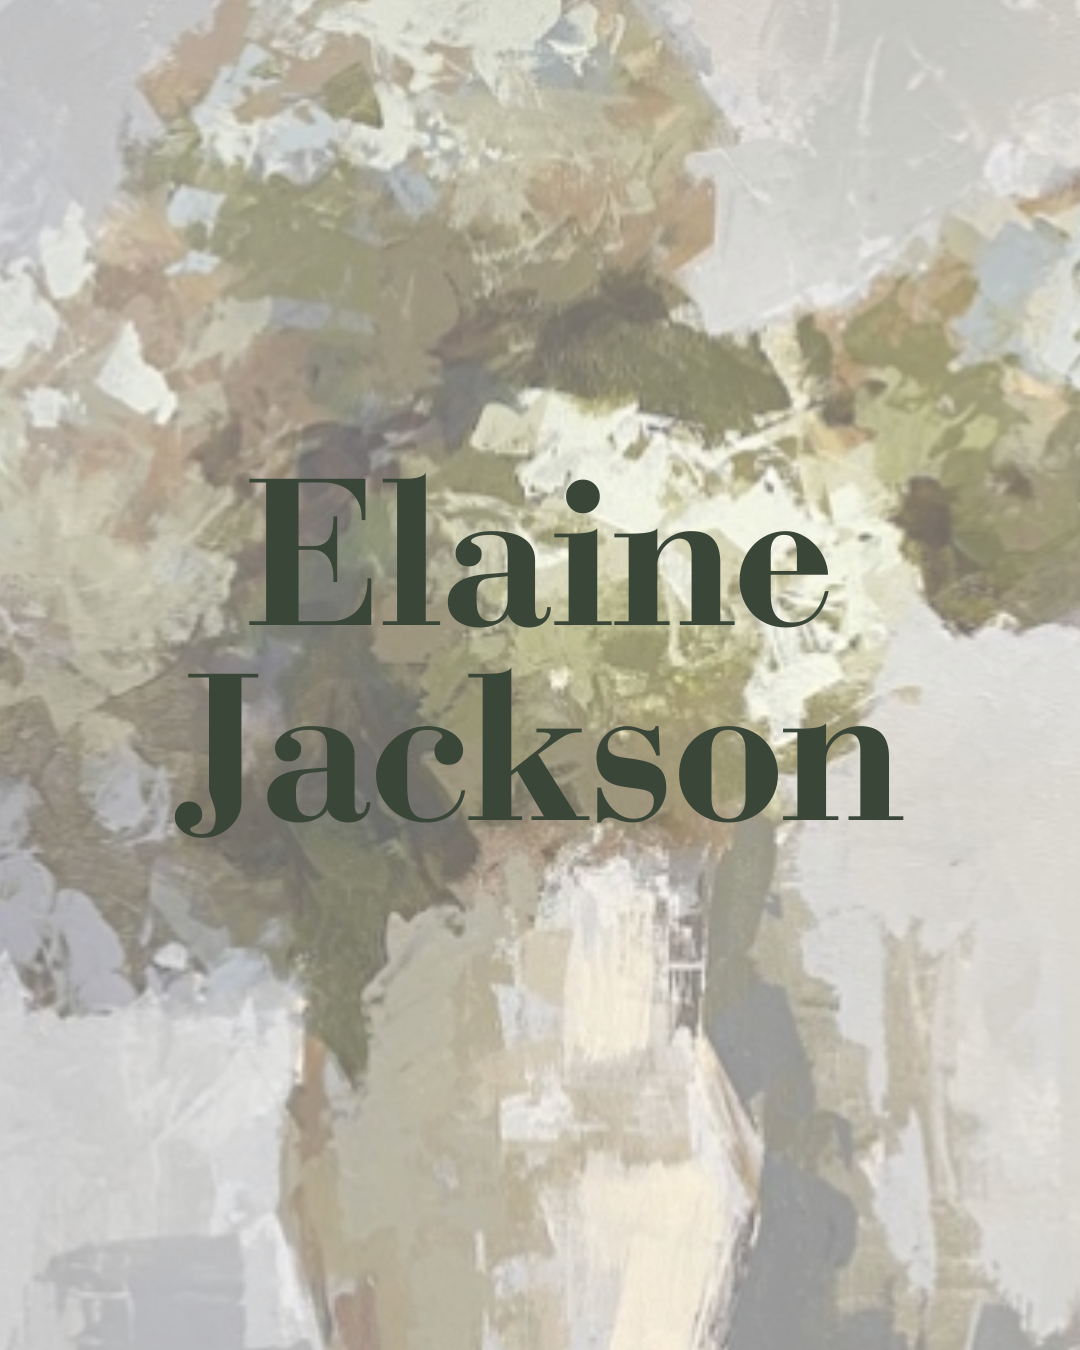 Elain Jackson painting with text overlay that reads Elain Jackson